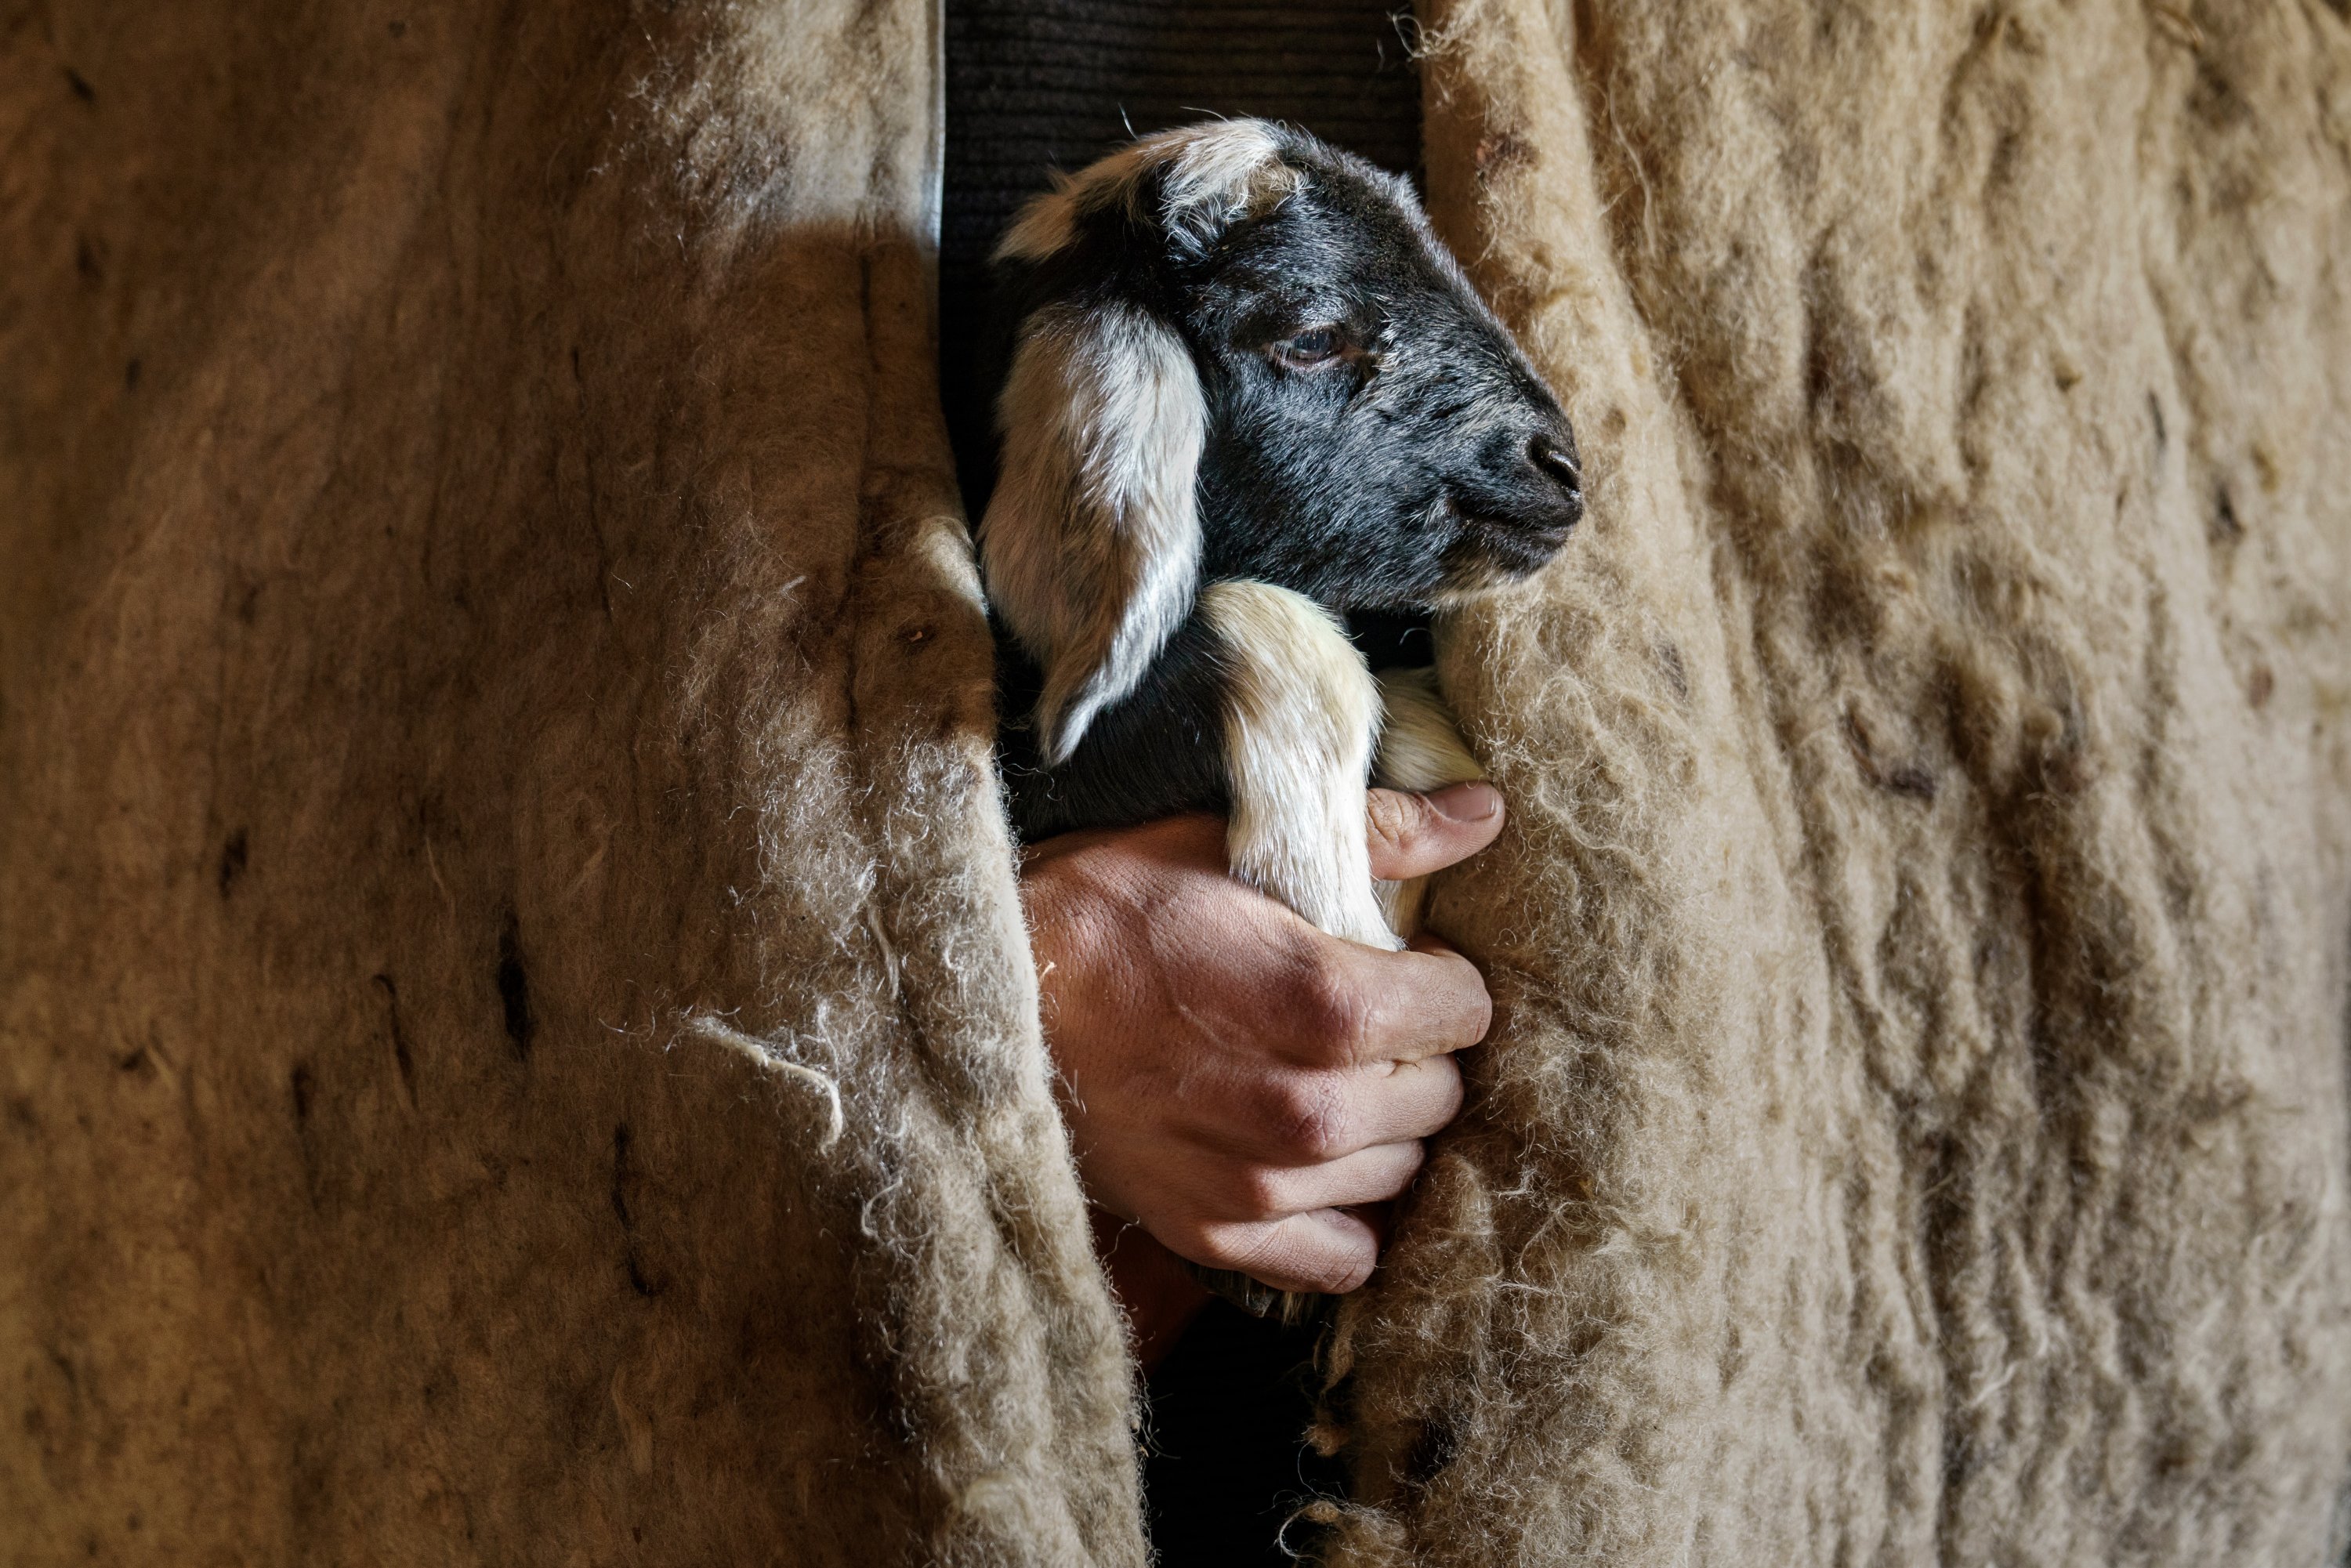 Seorang gembala yang memakai kain kepenek menghangatkan seekor domba kecil.  (Shutterstock)